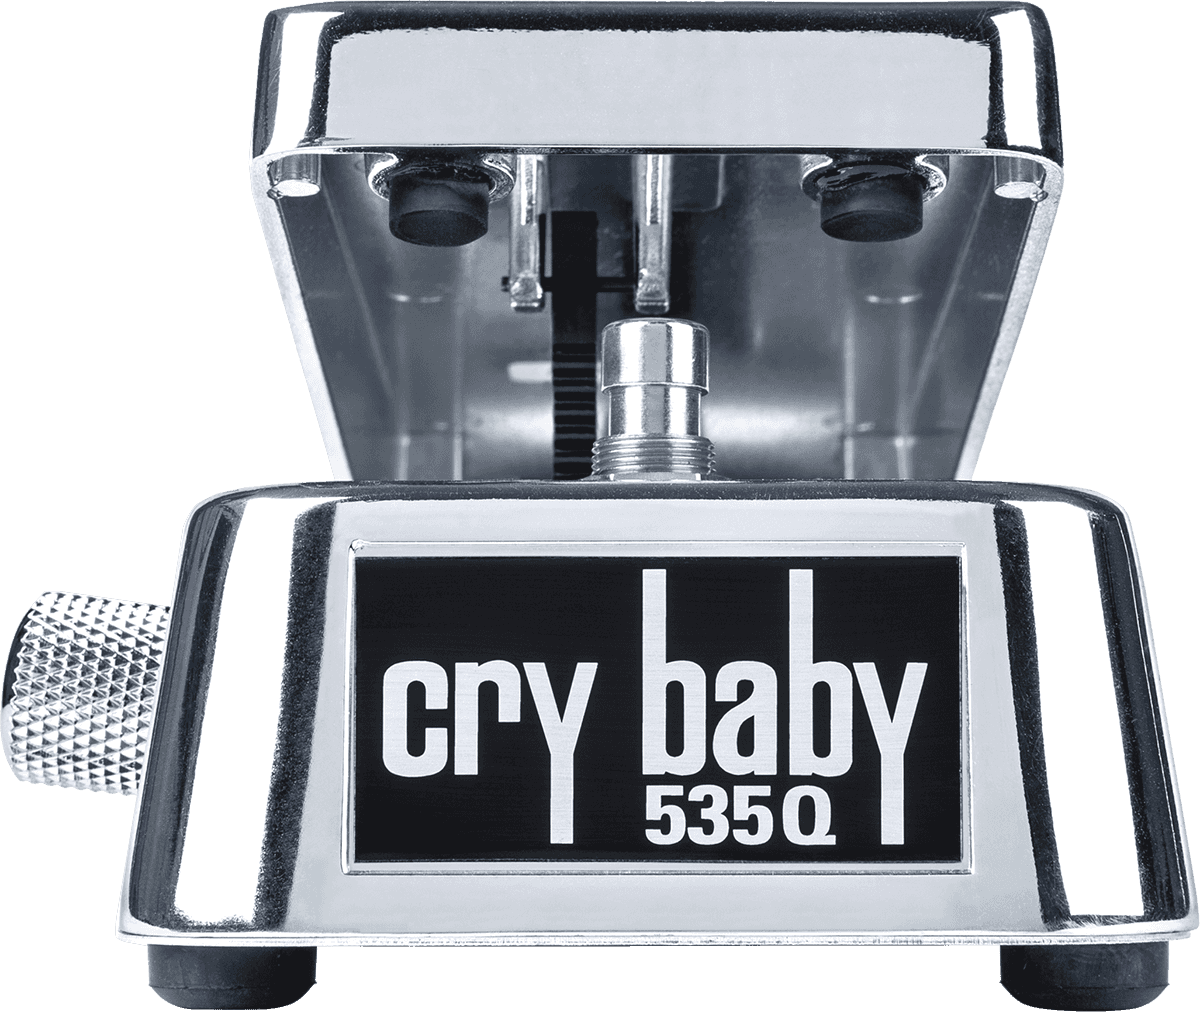 Dunlop Crybaby 535Q-C